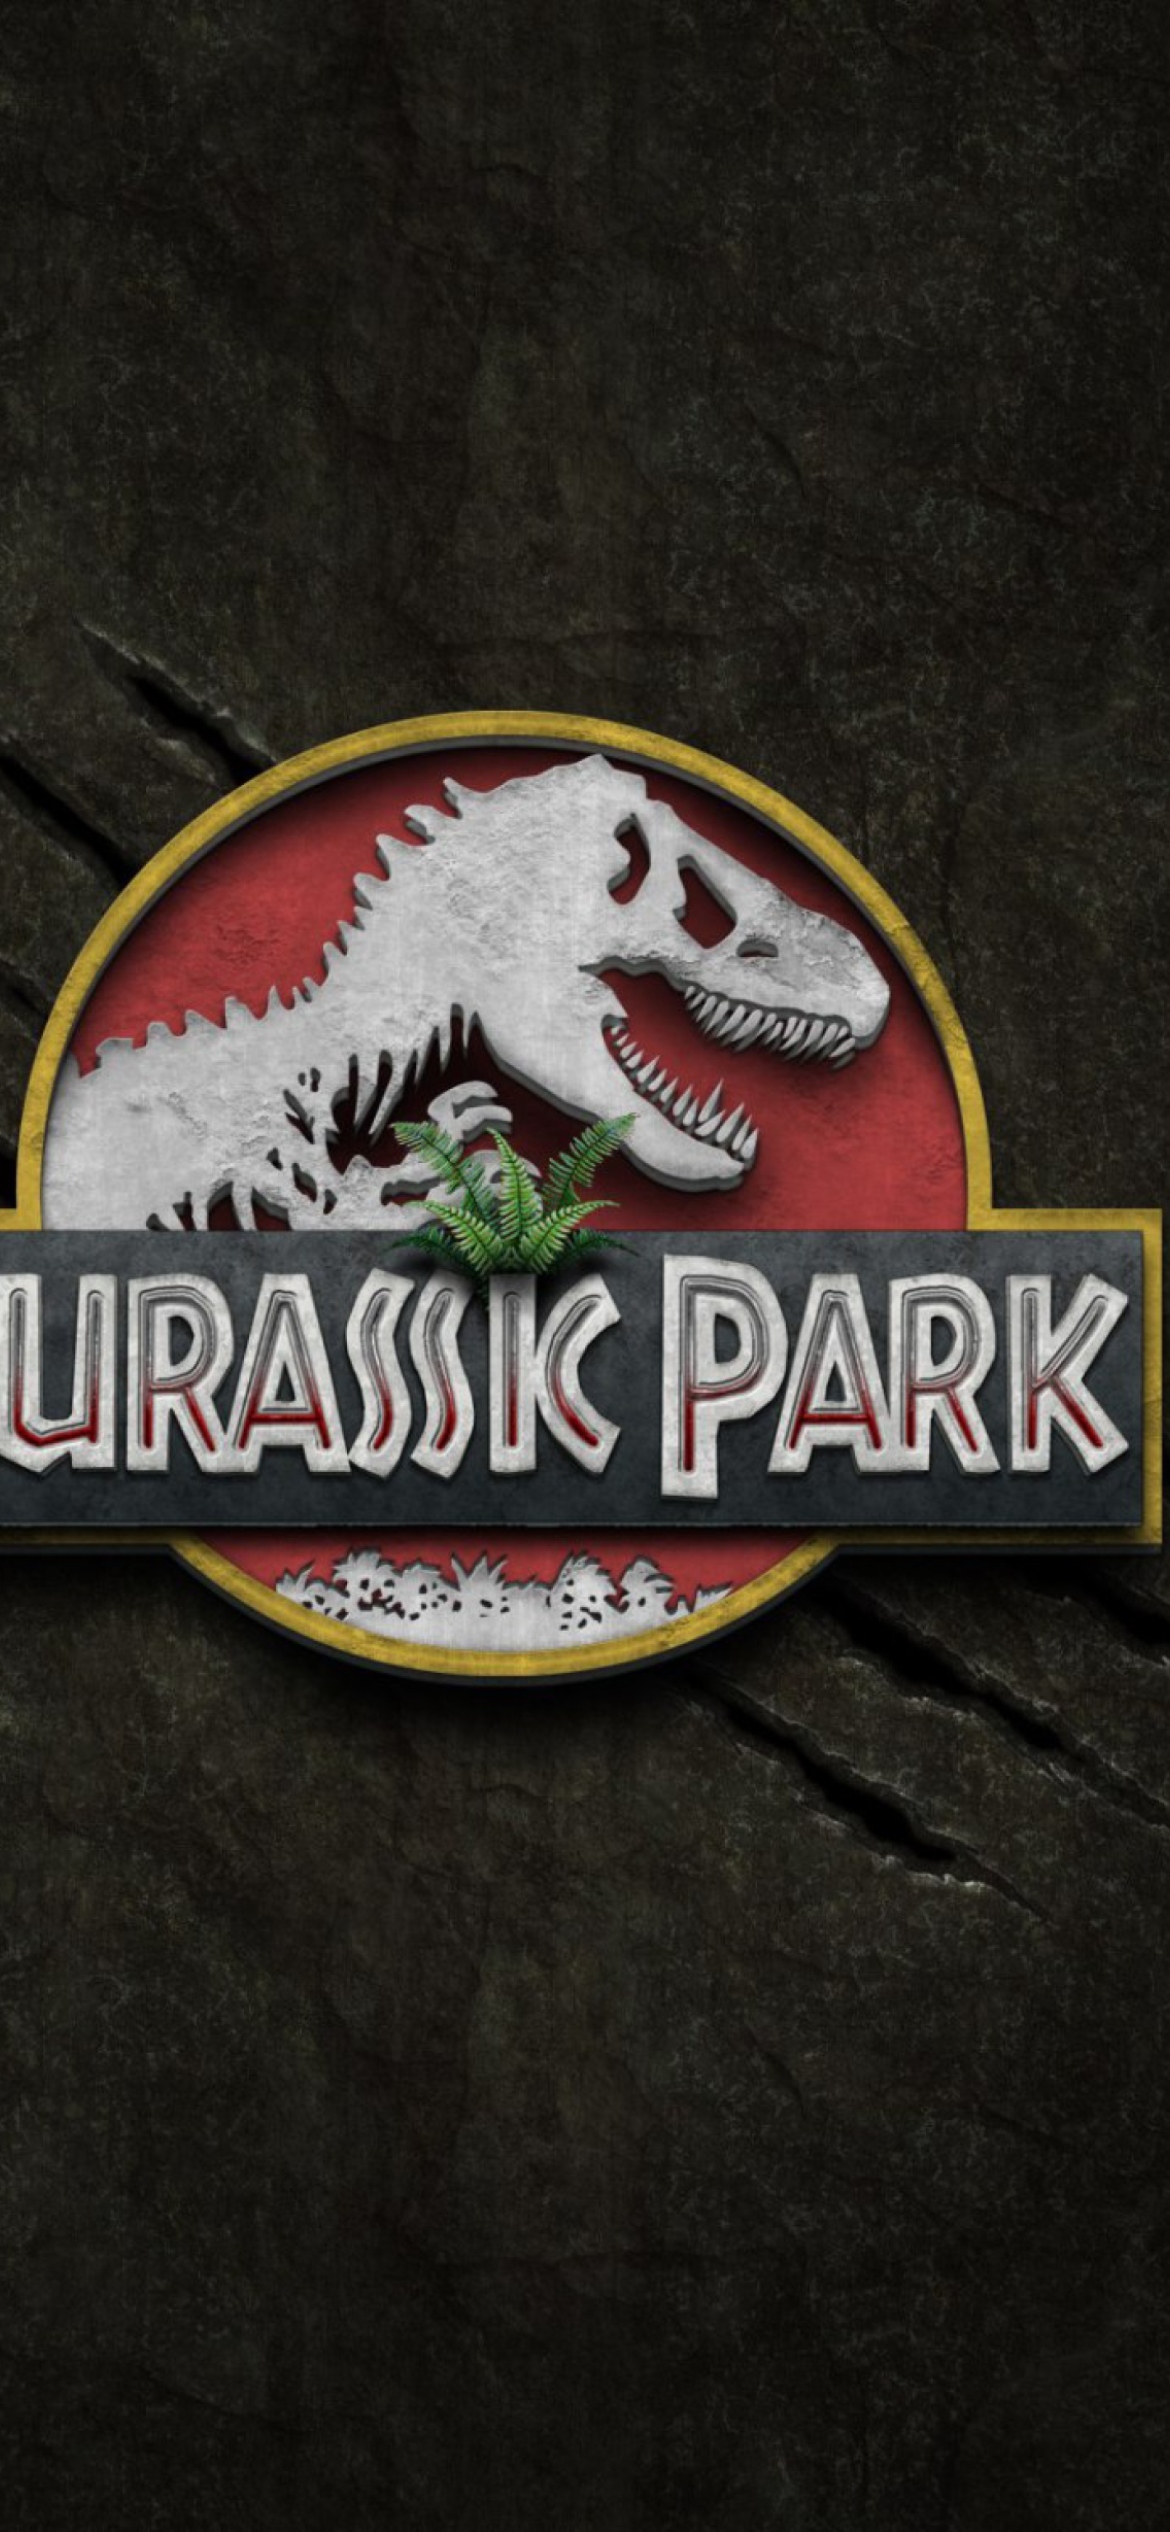 Jurassic Park Wallpaper IPhone 70 images